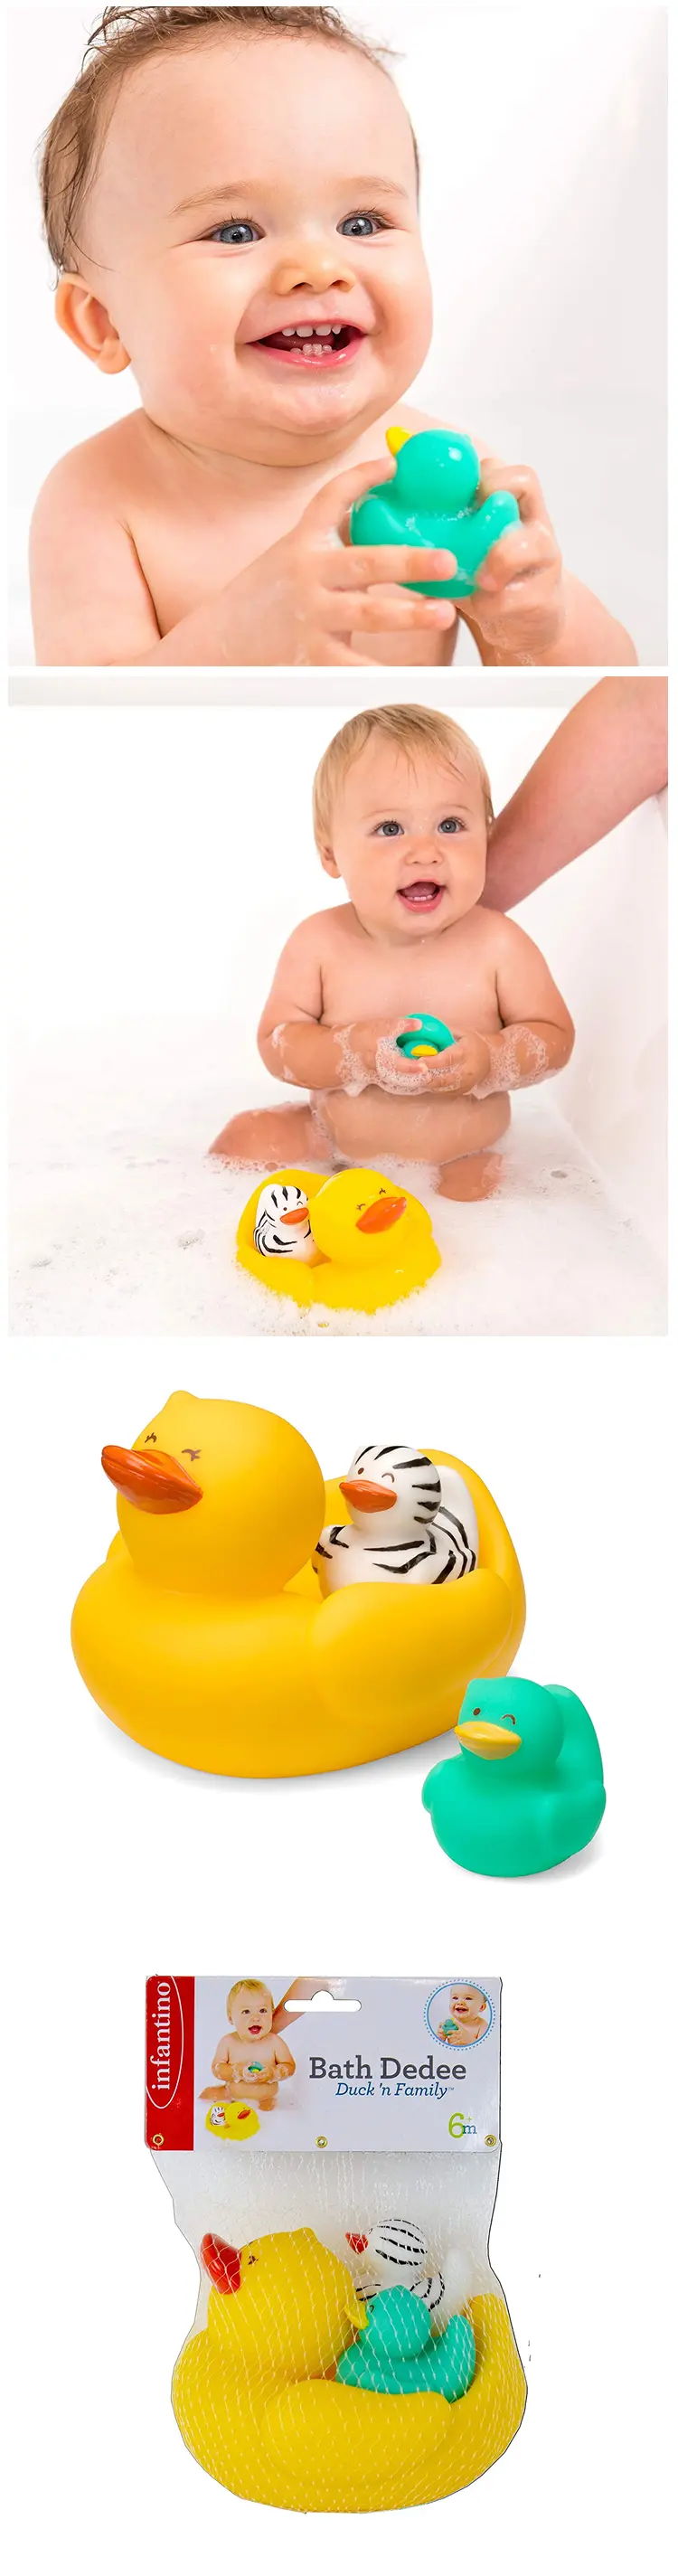 infantino 小鸭洗澡玩具套装